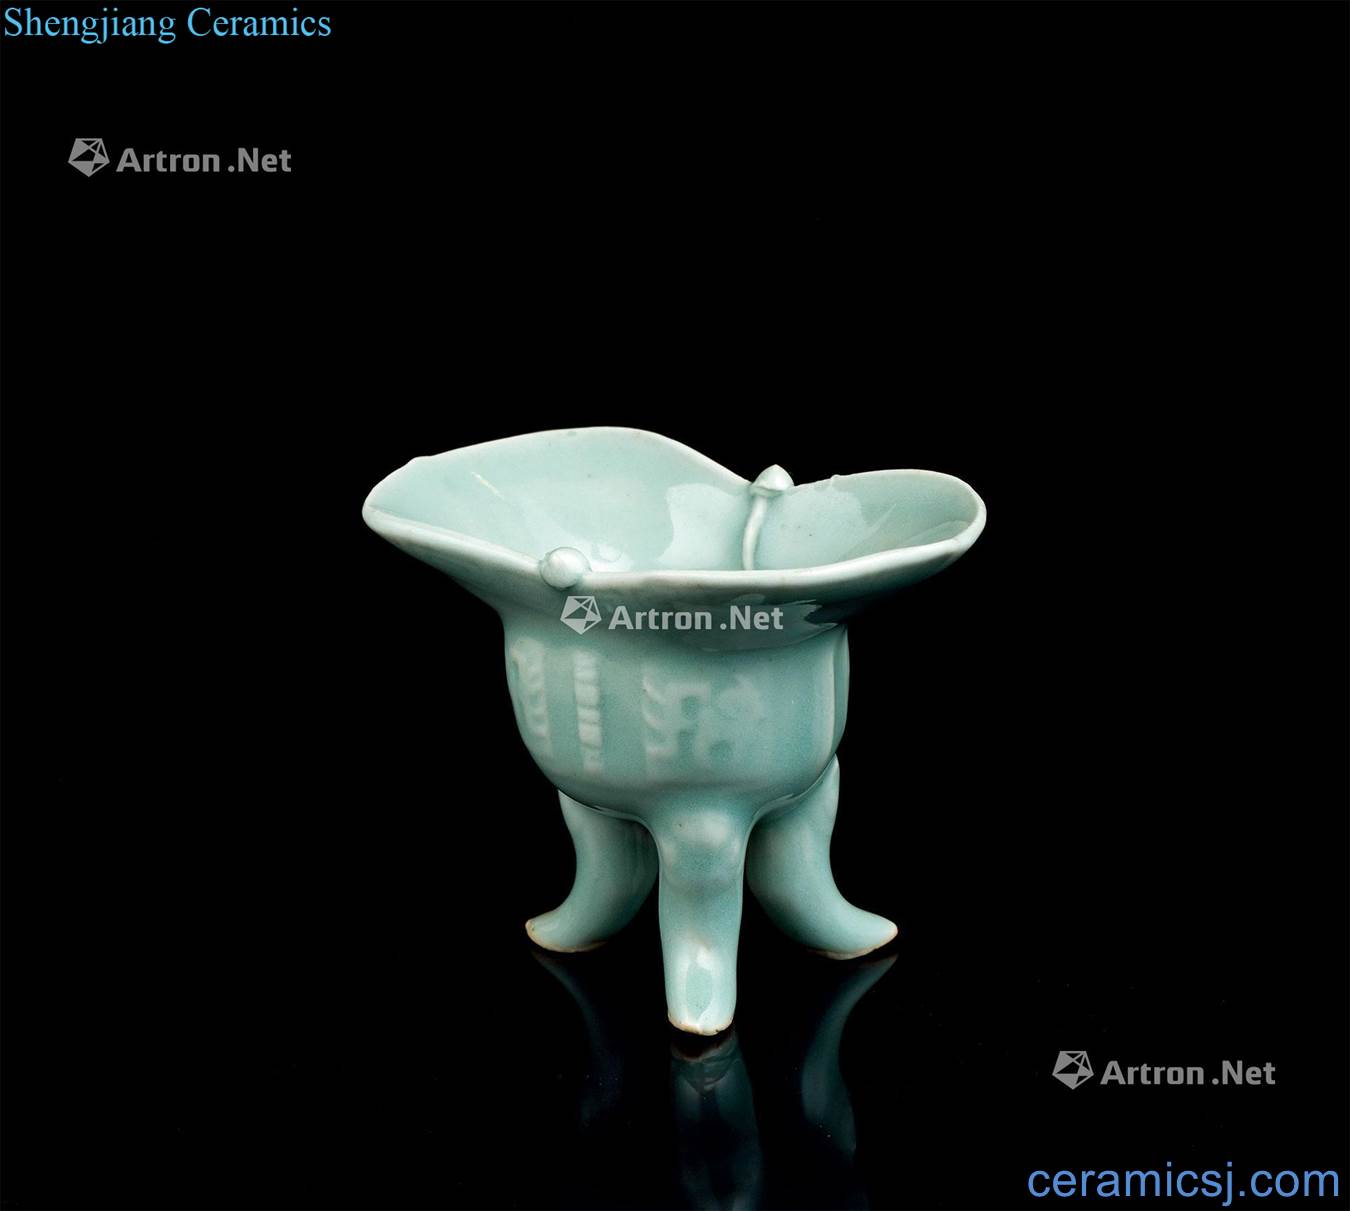 The yuan dynasty, Ming dynasty (1271-1644) celadon goblet